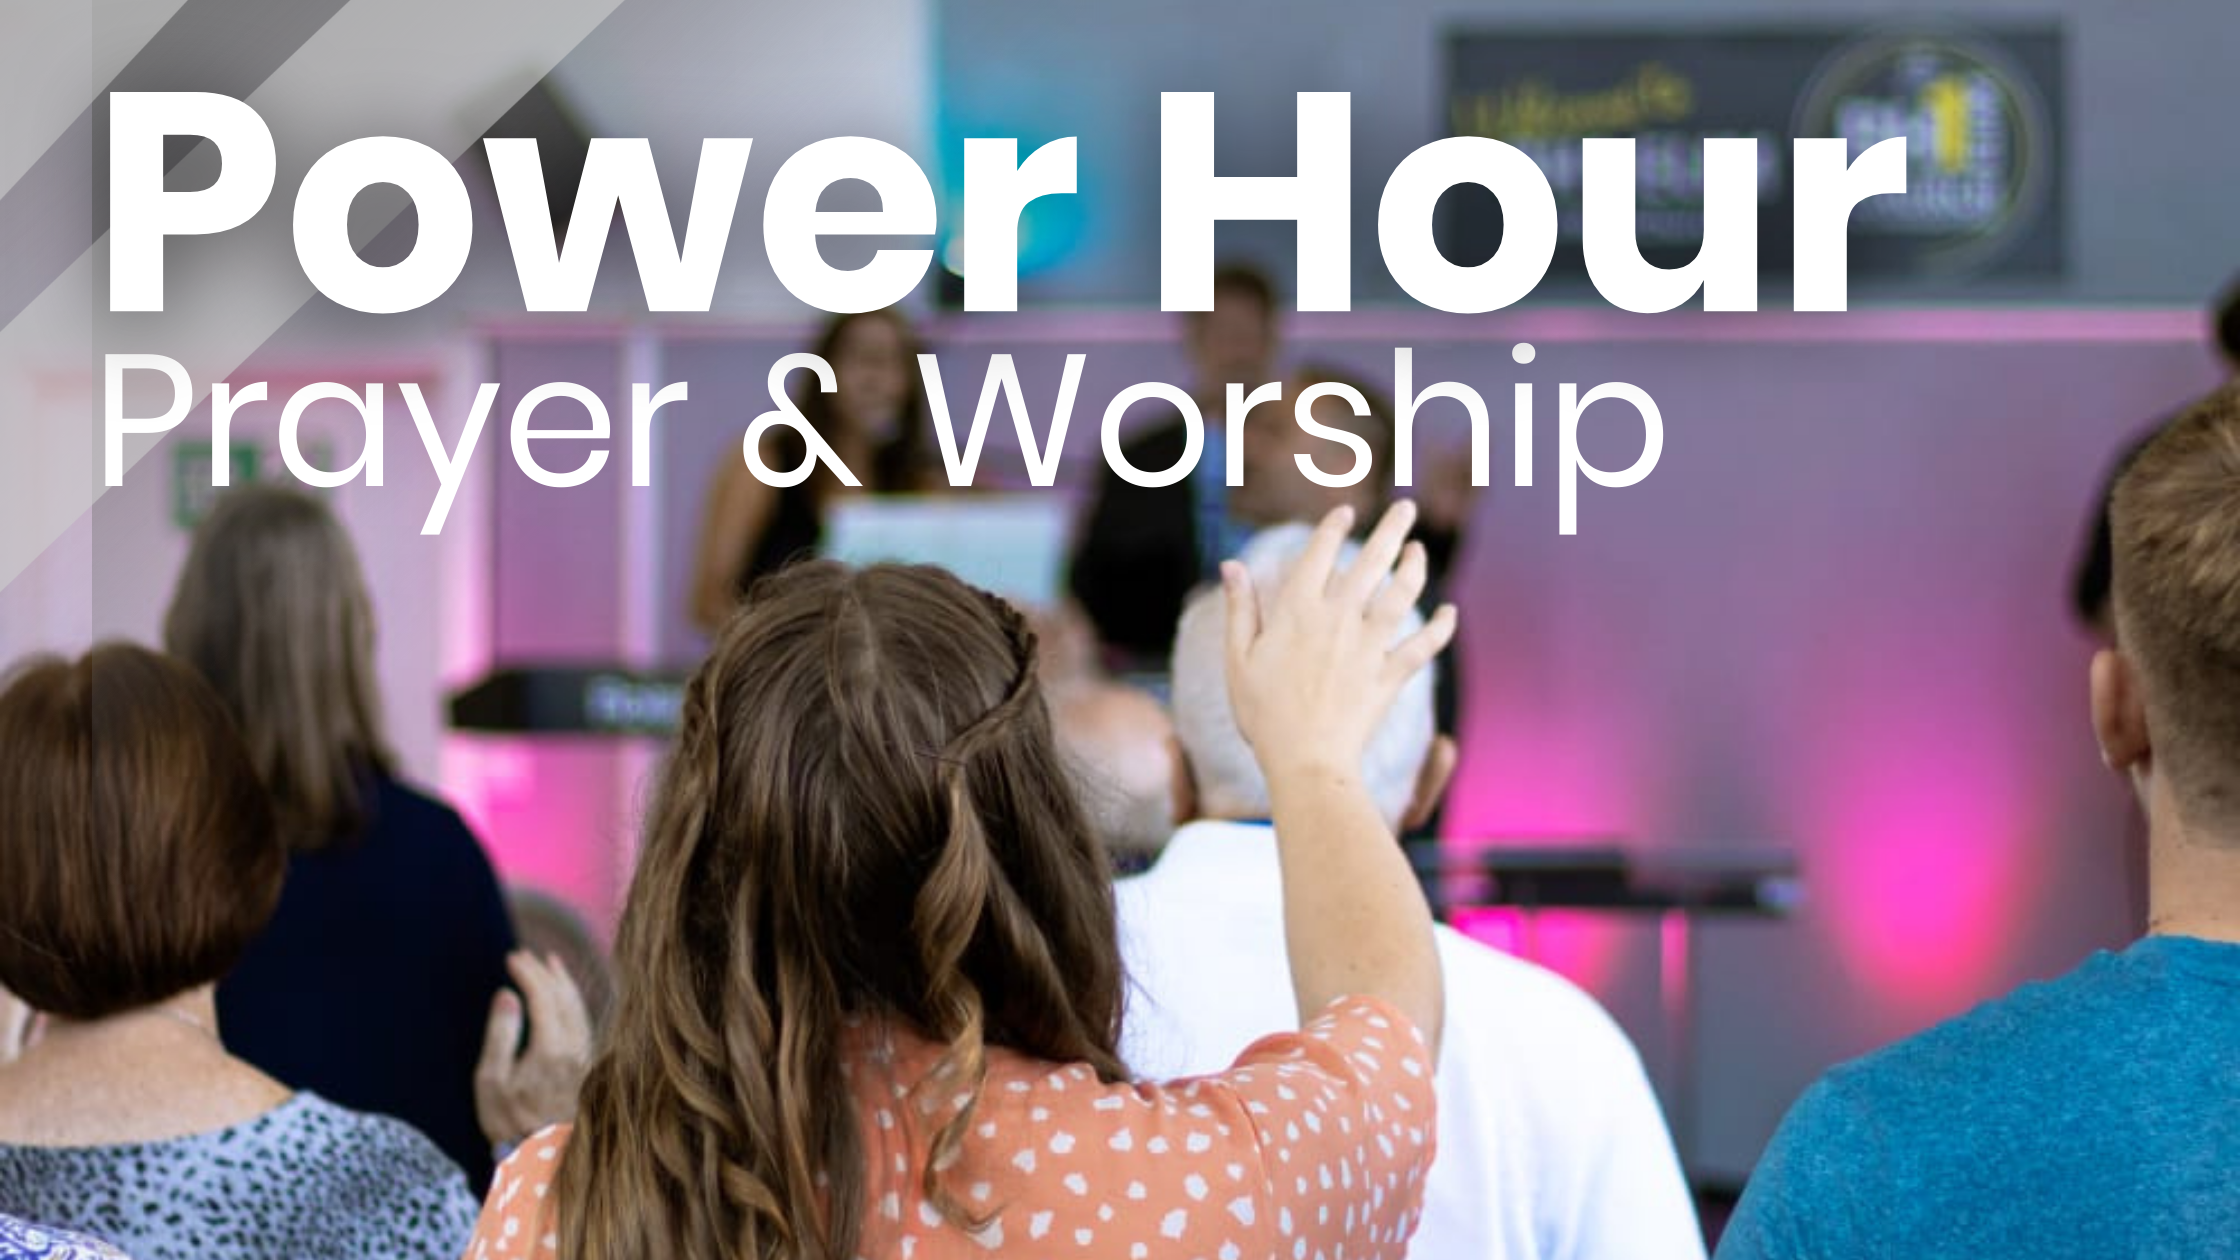 Sunday evening - power hour - prayer and worship